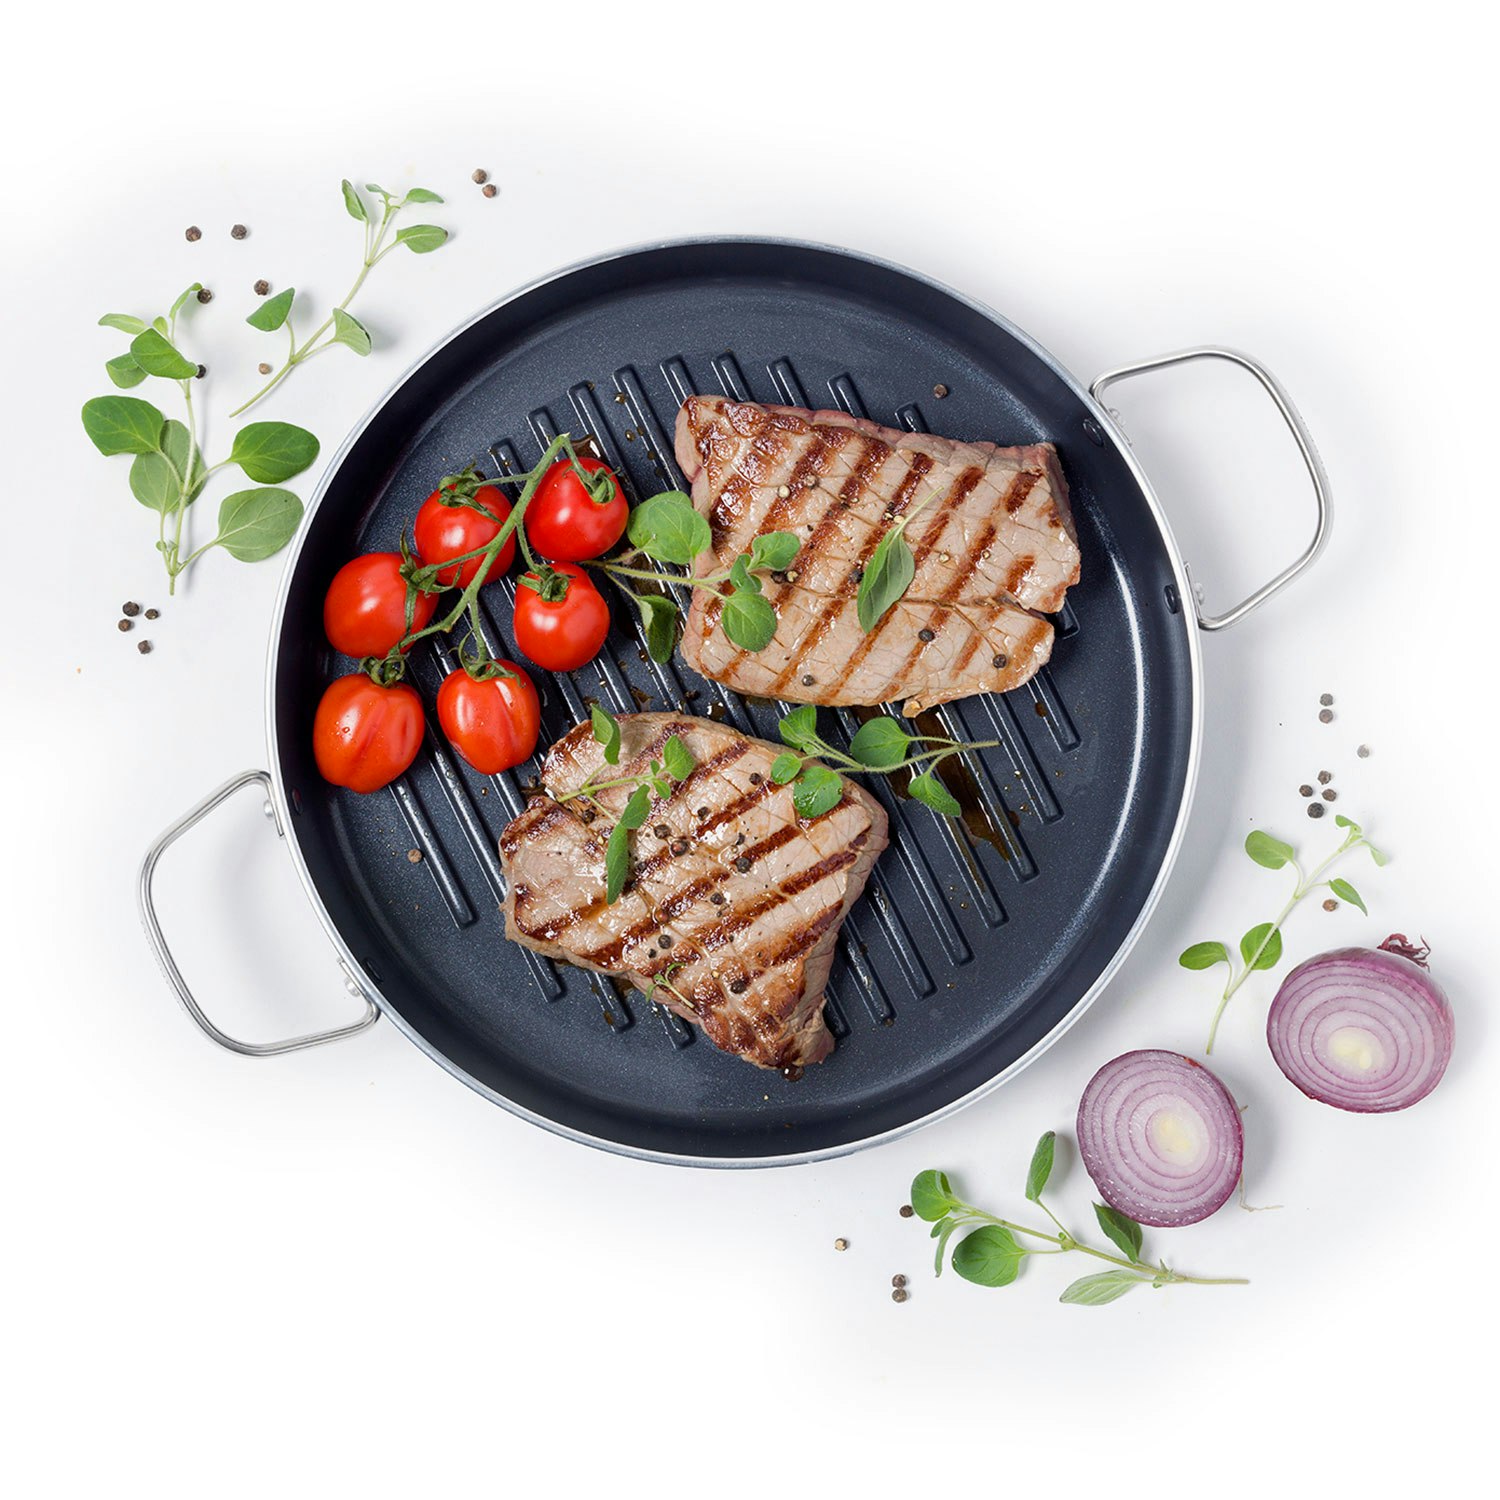 https://royaldesign.com/image/2/greenpan-essentials-round-grill-pan-28cm-1